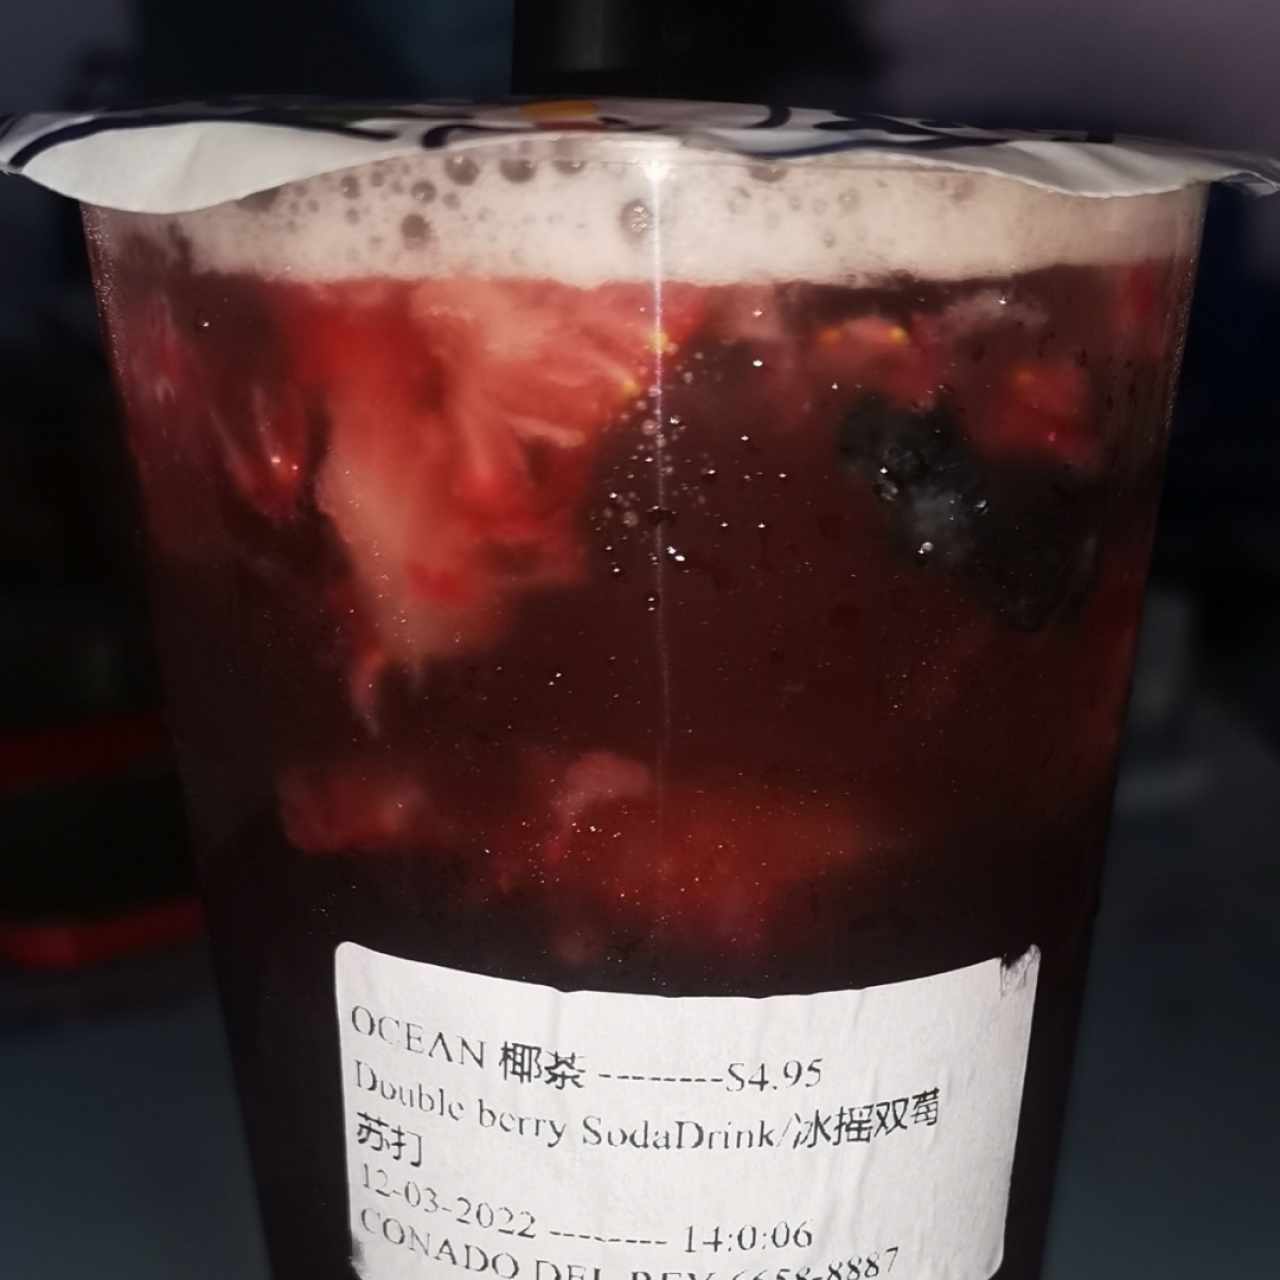 Double berry soda drink